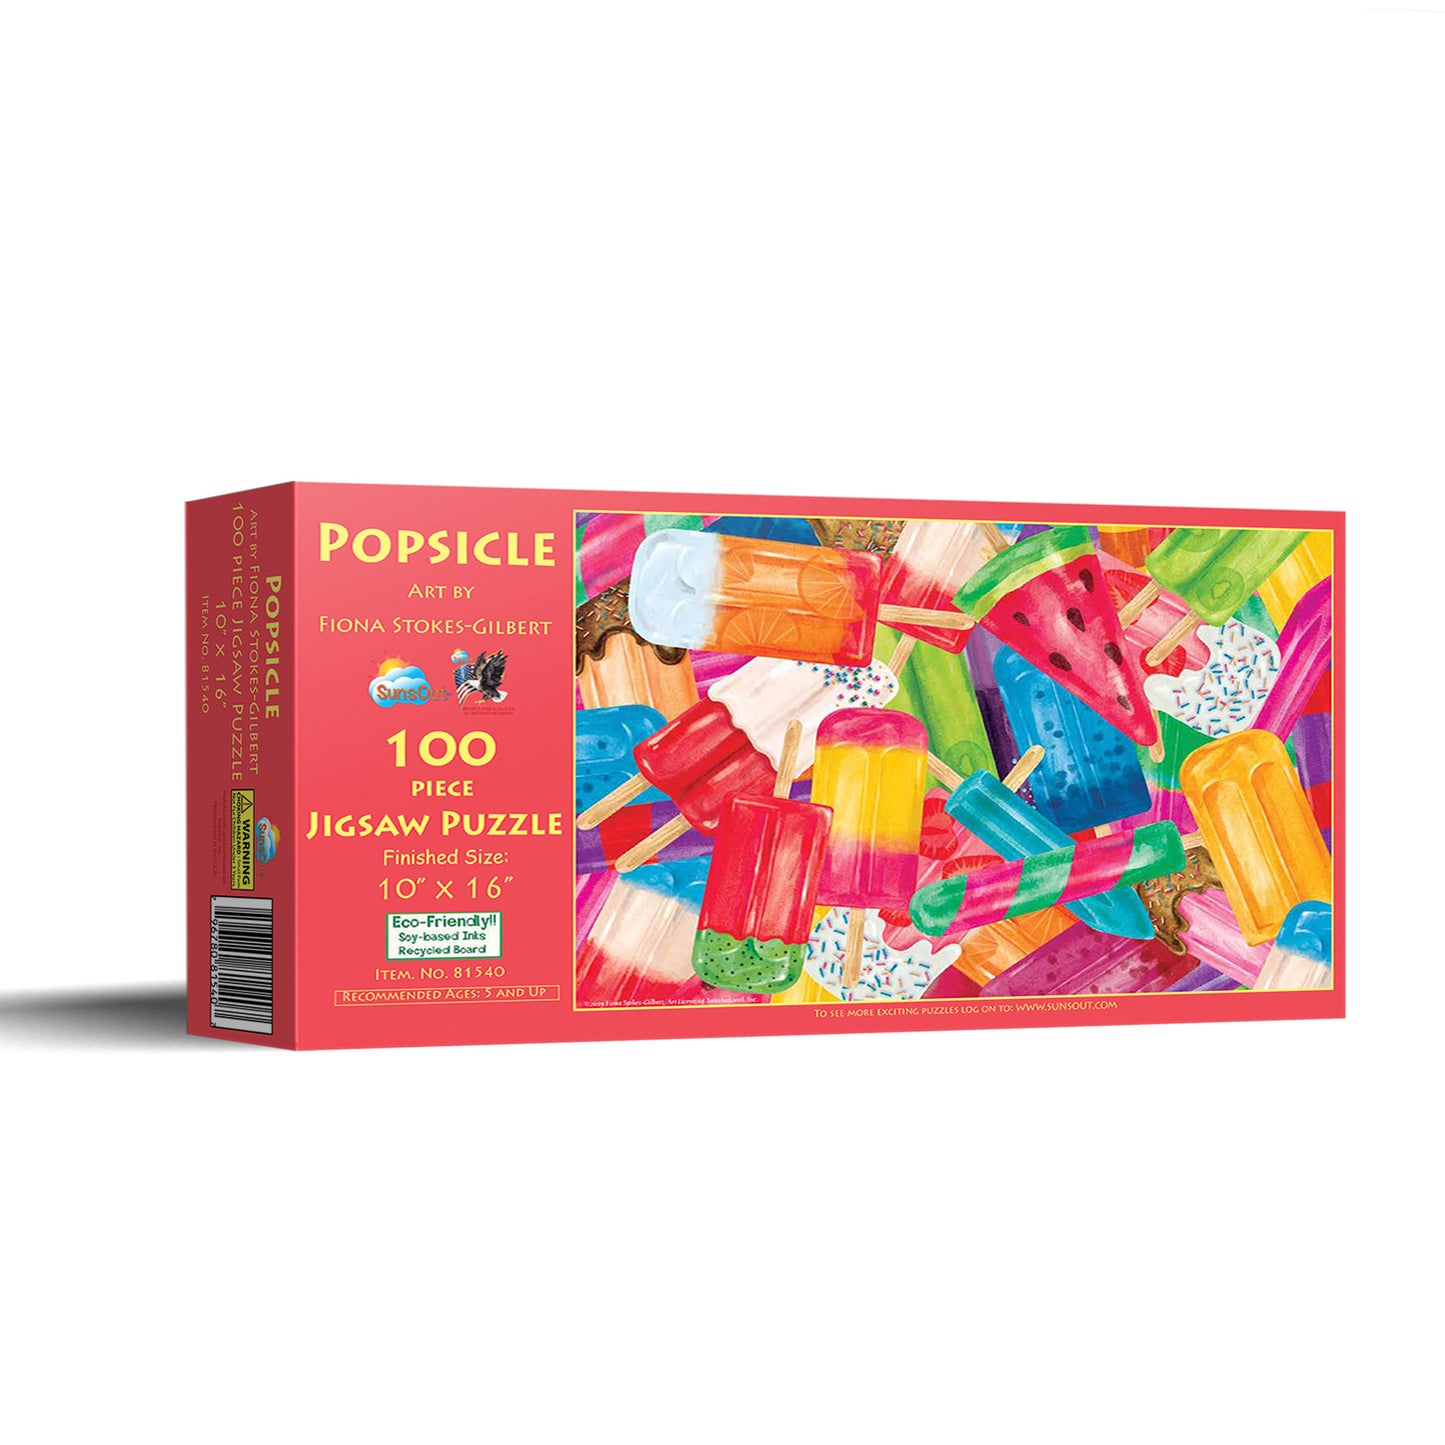 Popsicle - 100 Piece Jigsaw Puzzle